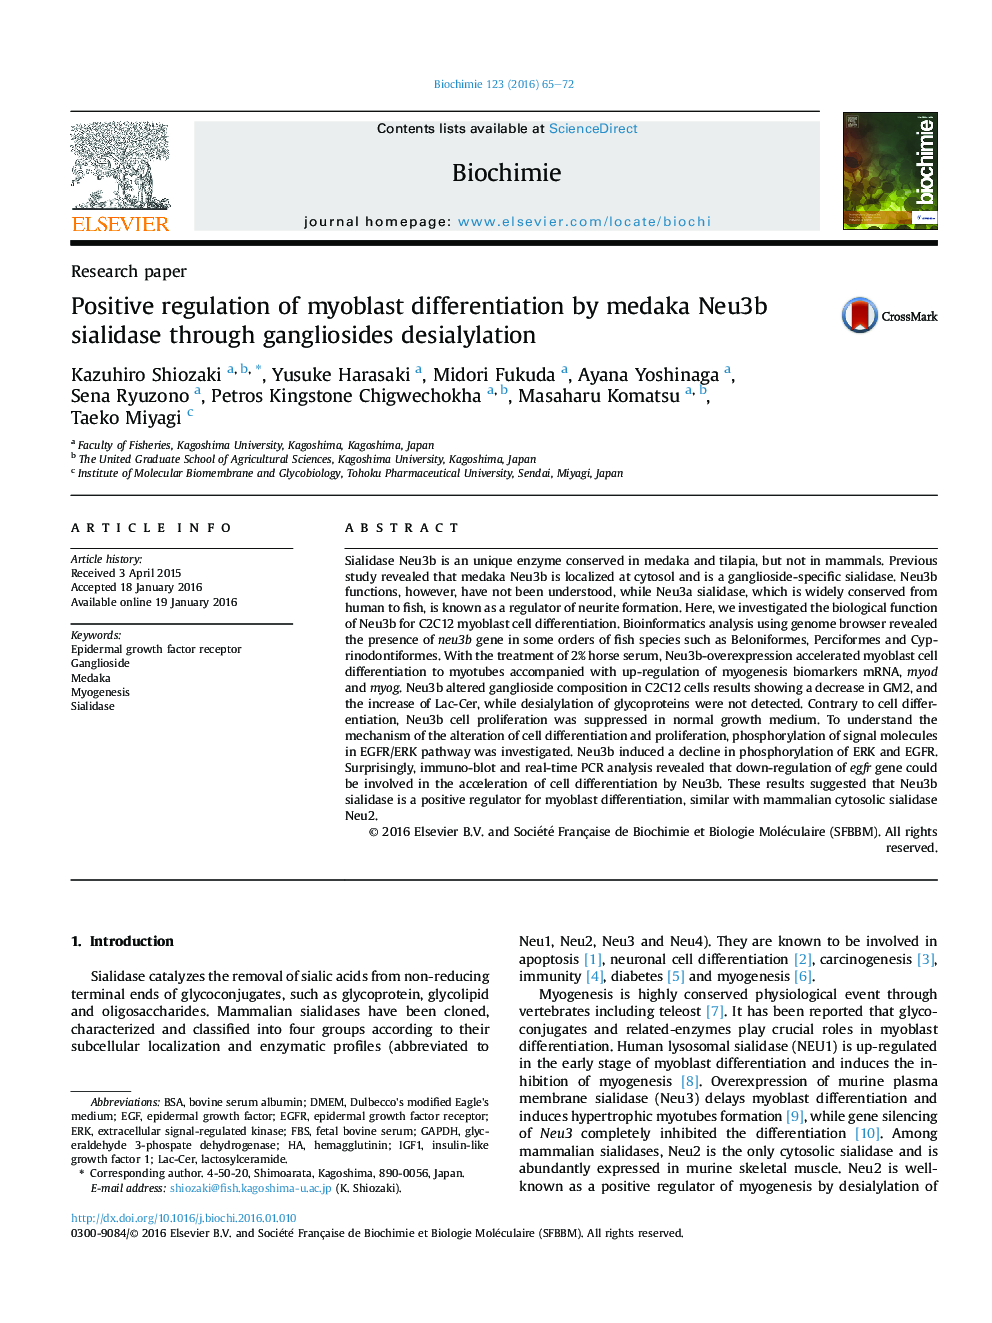 Positive regulation of myoblast differentiation by medaka Neu3b sialidase through gangliosides desialylation